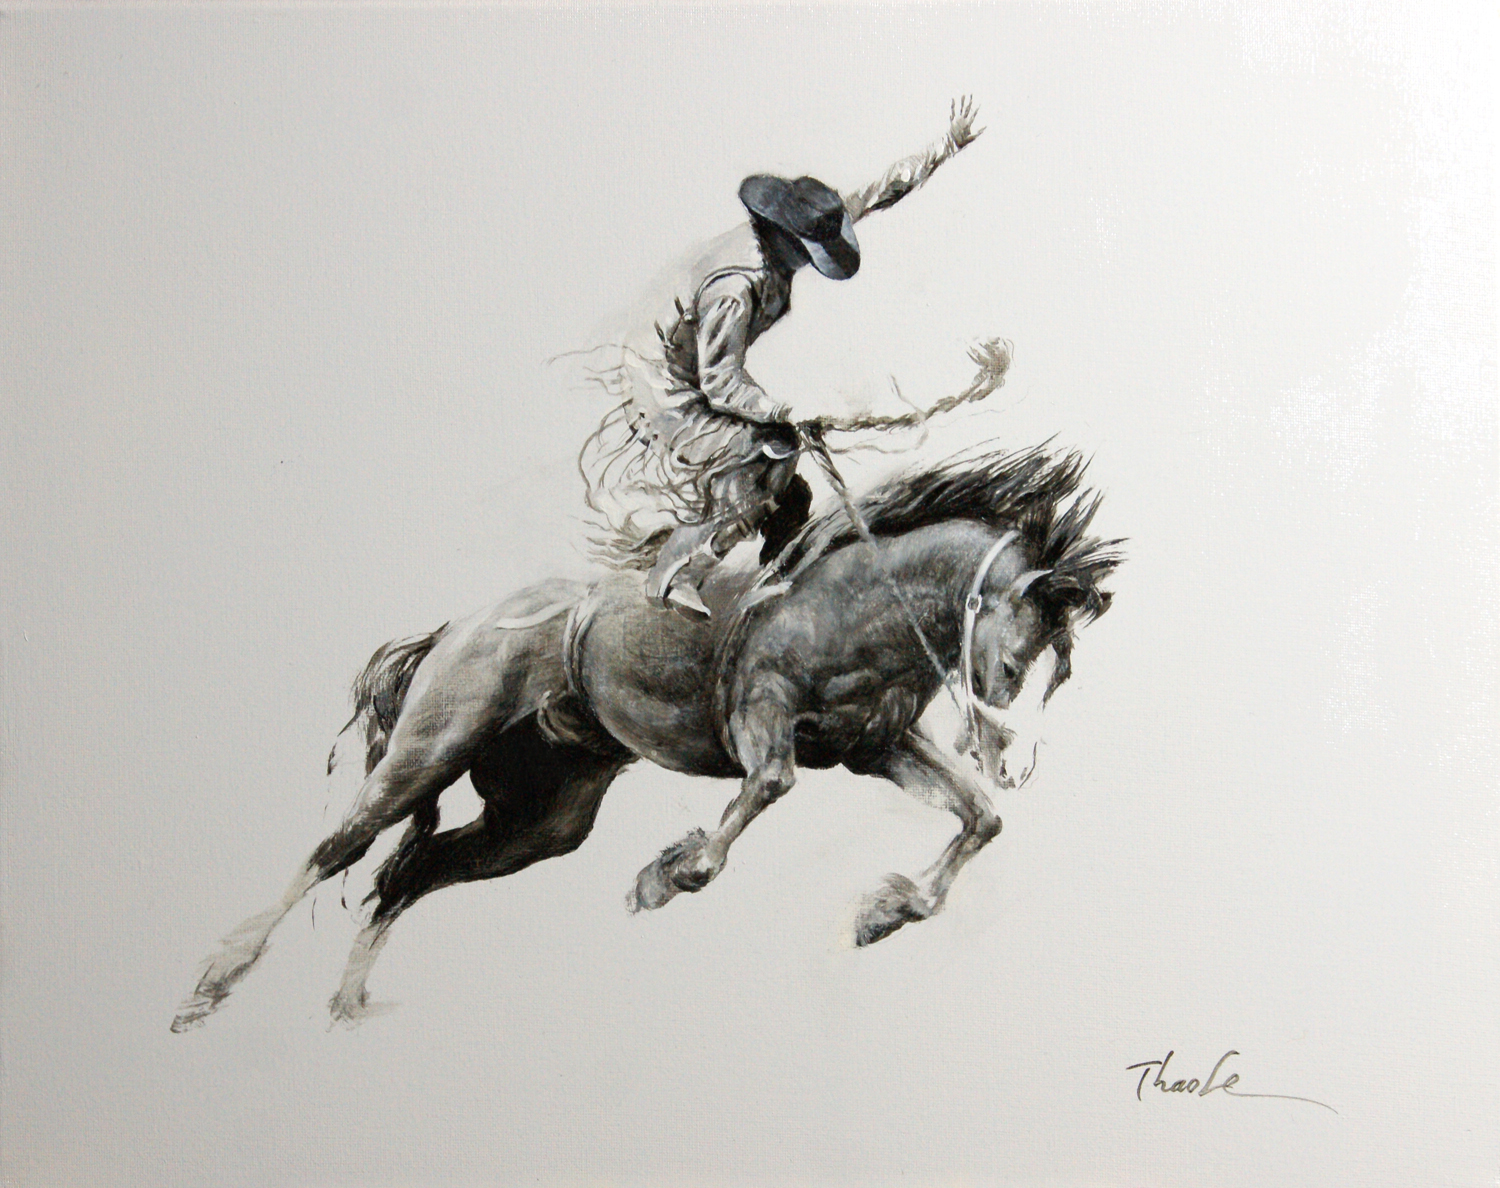 The Horse Rider картина Автор. The Horse Rider картина.